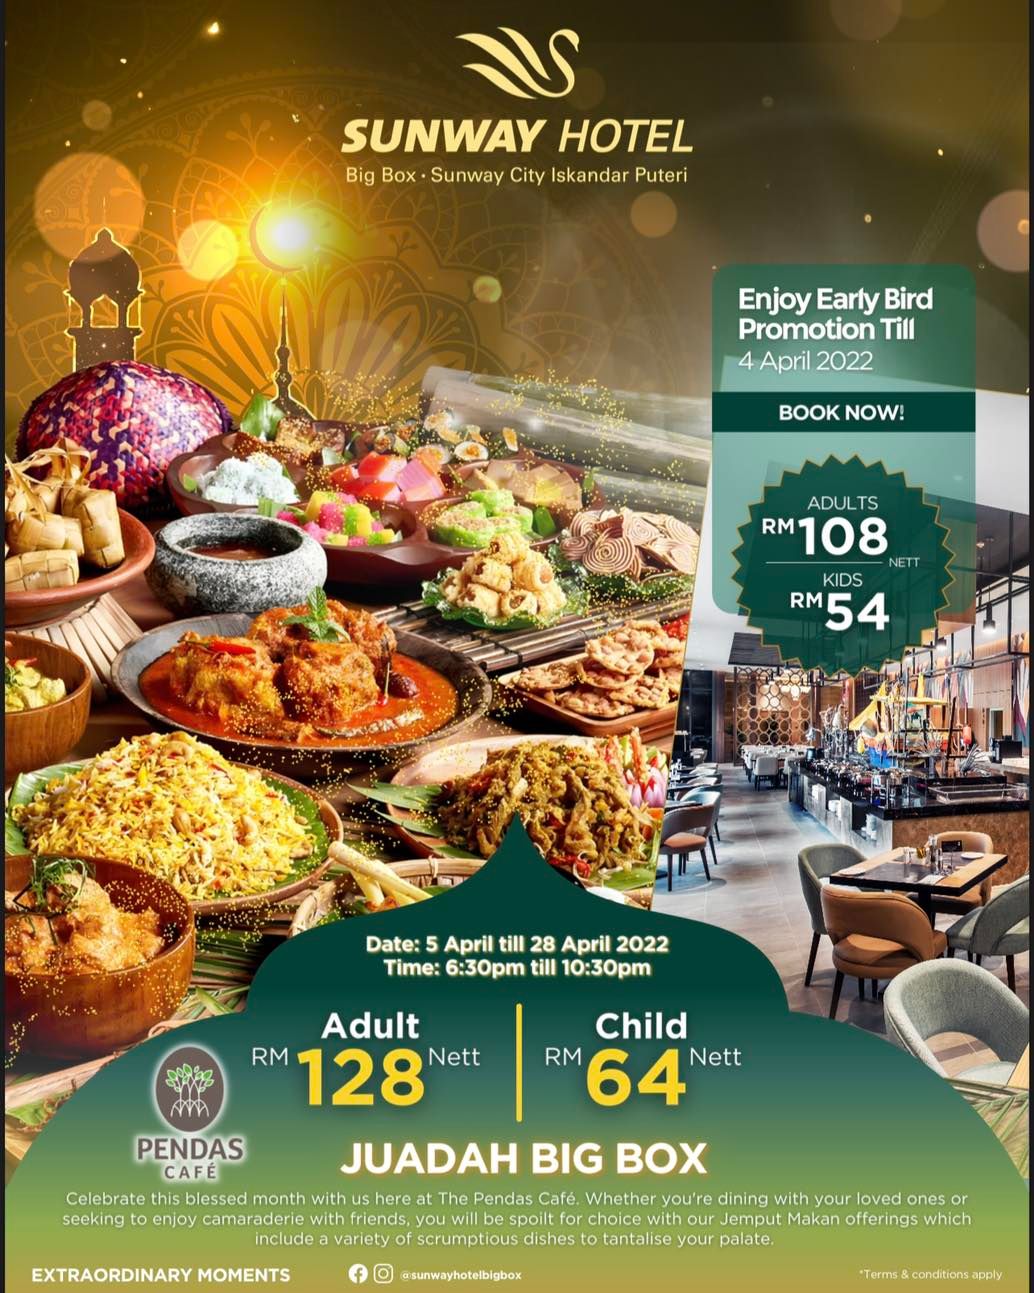 Sunway Hotel Big Box Serves Up Juadah Big Box Promising A Big Feast For Ramadan